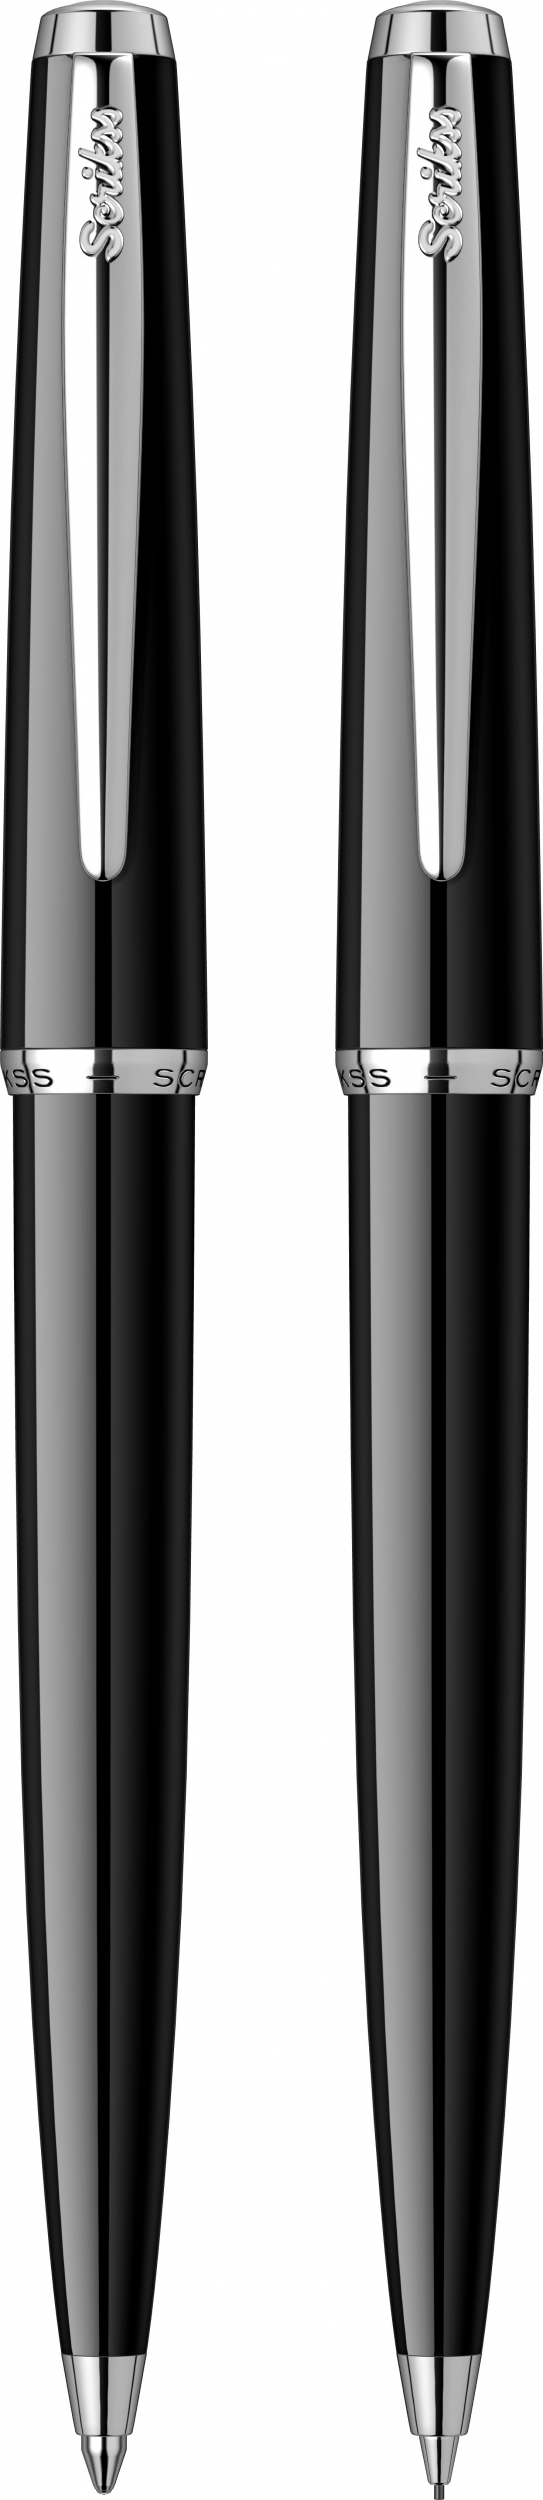 Комплект Автоматична х-ка и автоматичен молив Scrikss Vintage 33, модел 55998, цвят Черен